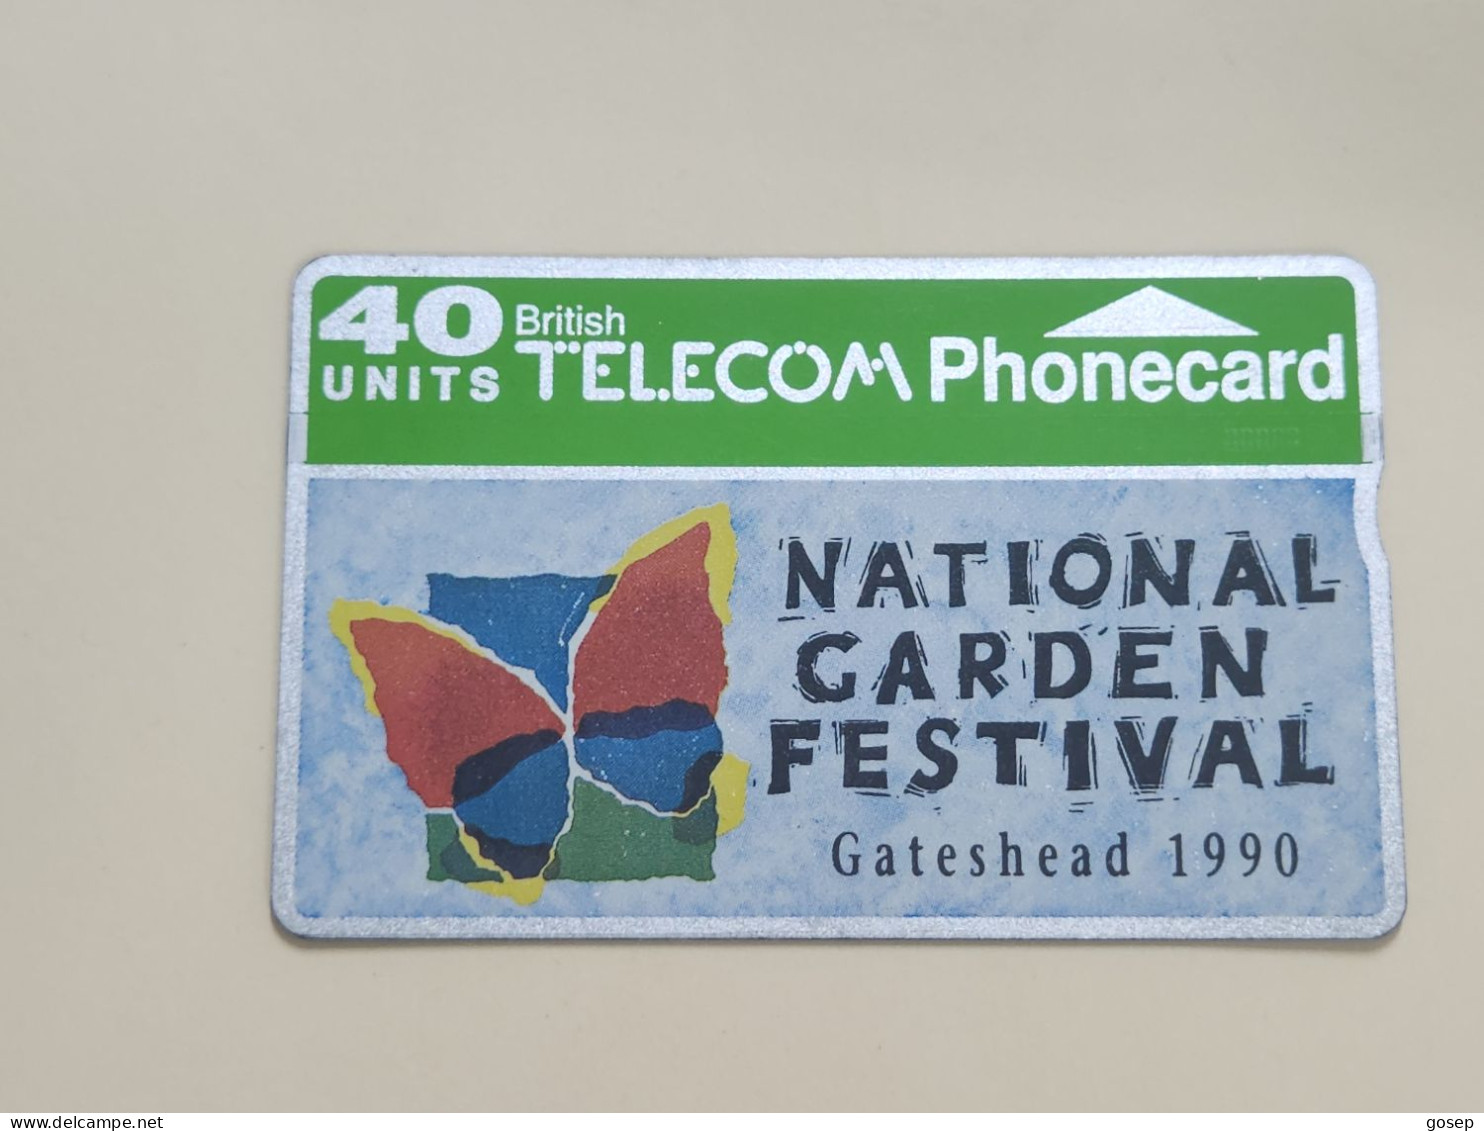 United Kingdom-(BTC015)-GATESHEAD Garden Festival(306)(40units)(041C18475)price Cataloge 6.00£ Used+1card Prepiad Free - BT Commemorative Issues